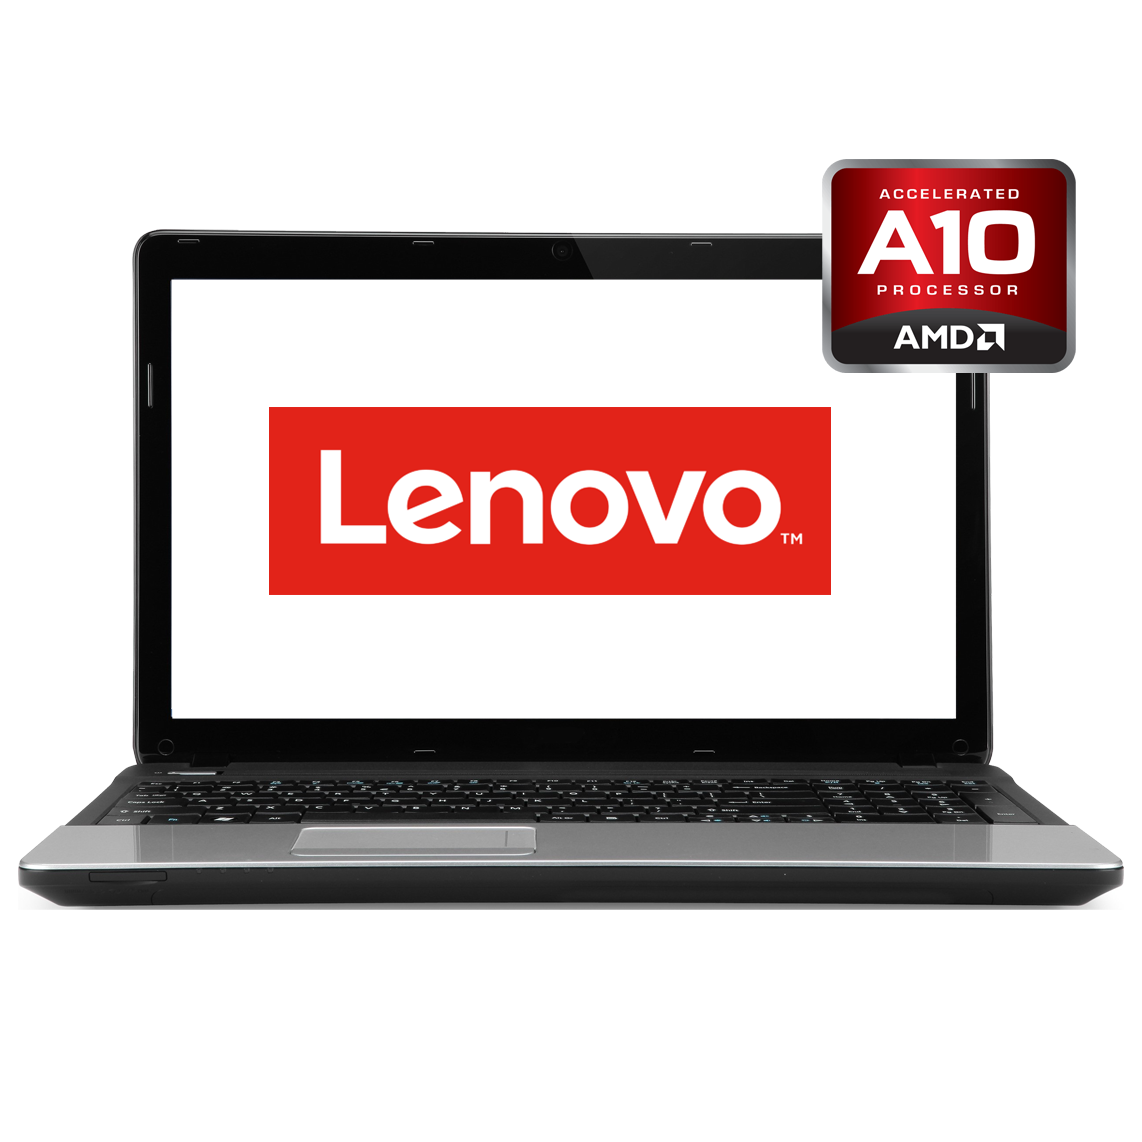 Lenovo - 14 inch AMD A10